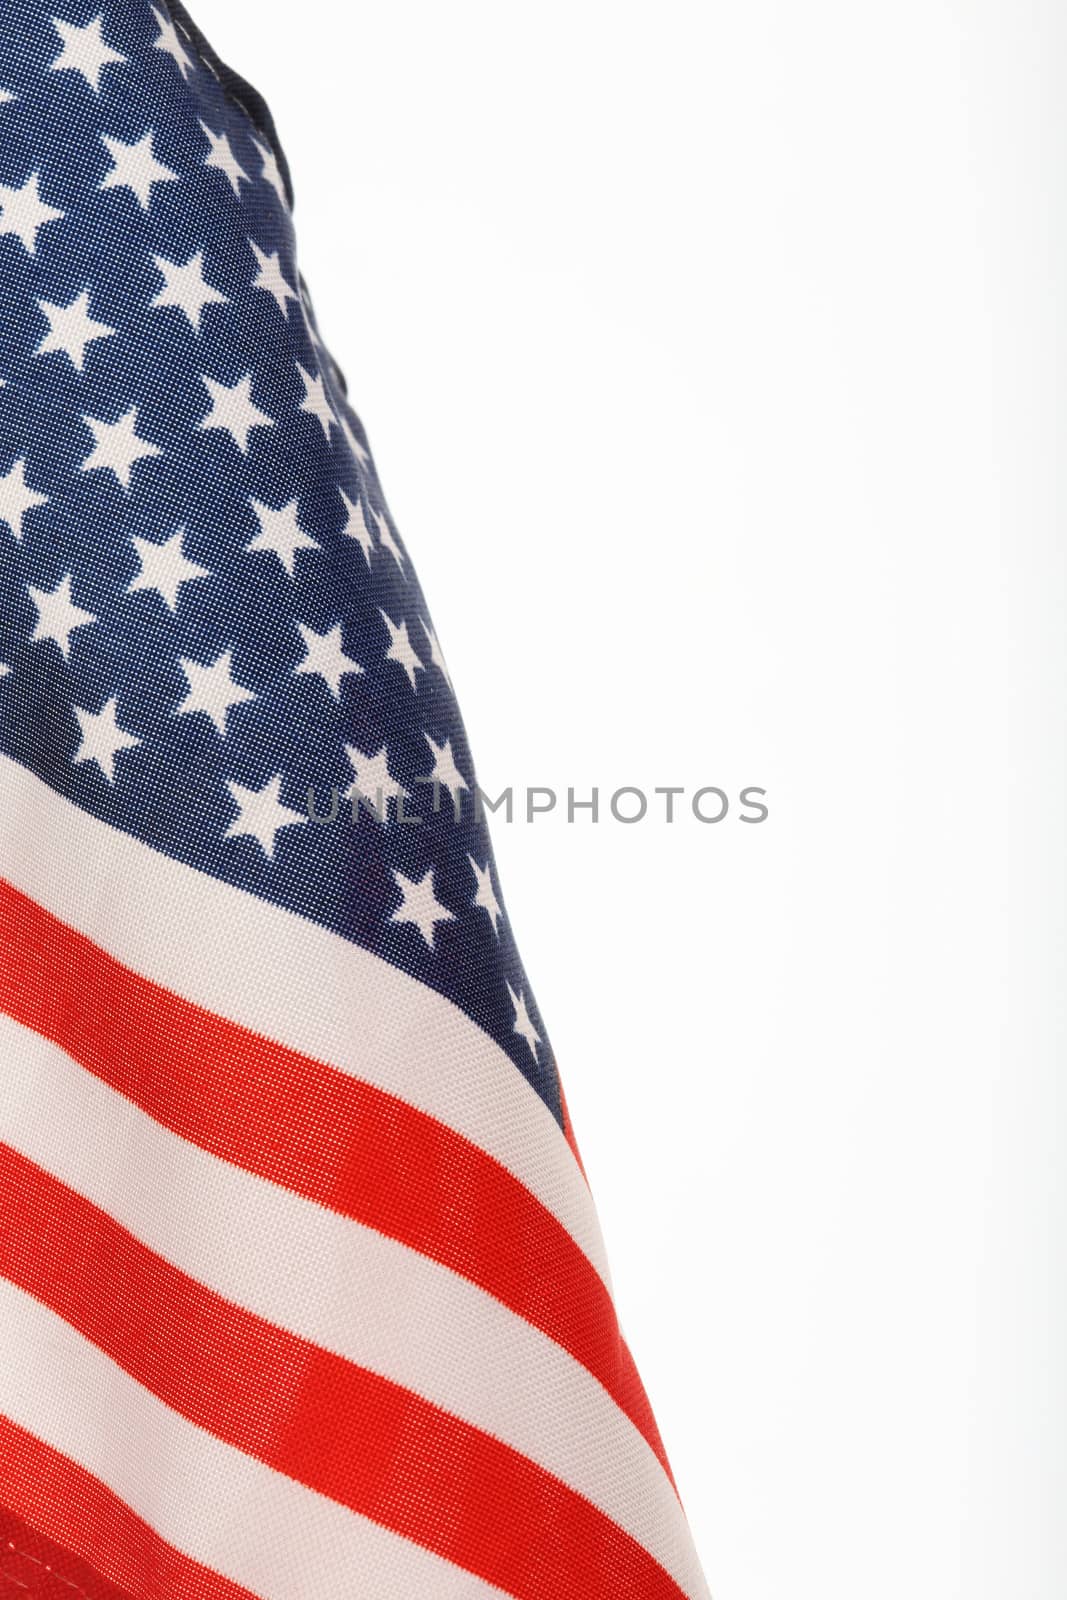 Flag of USA by alexkosev